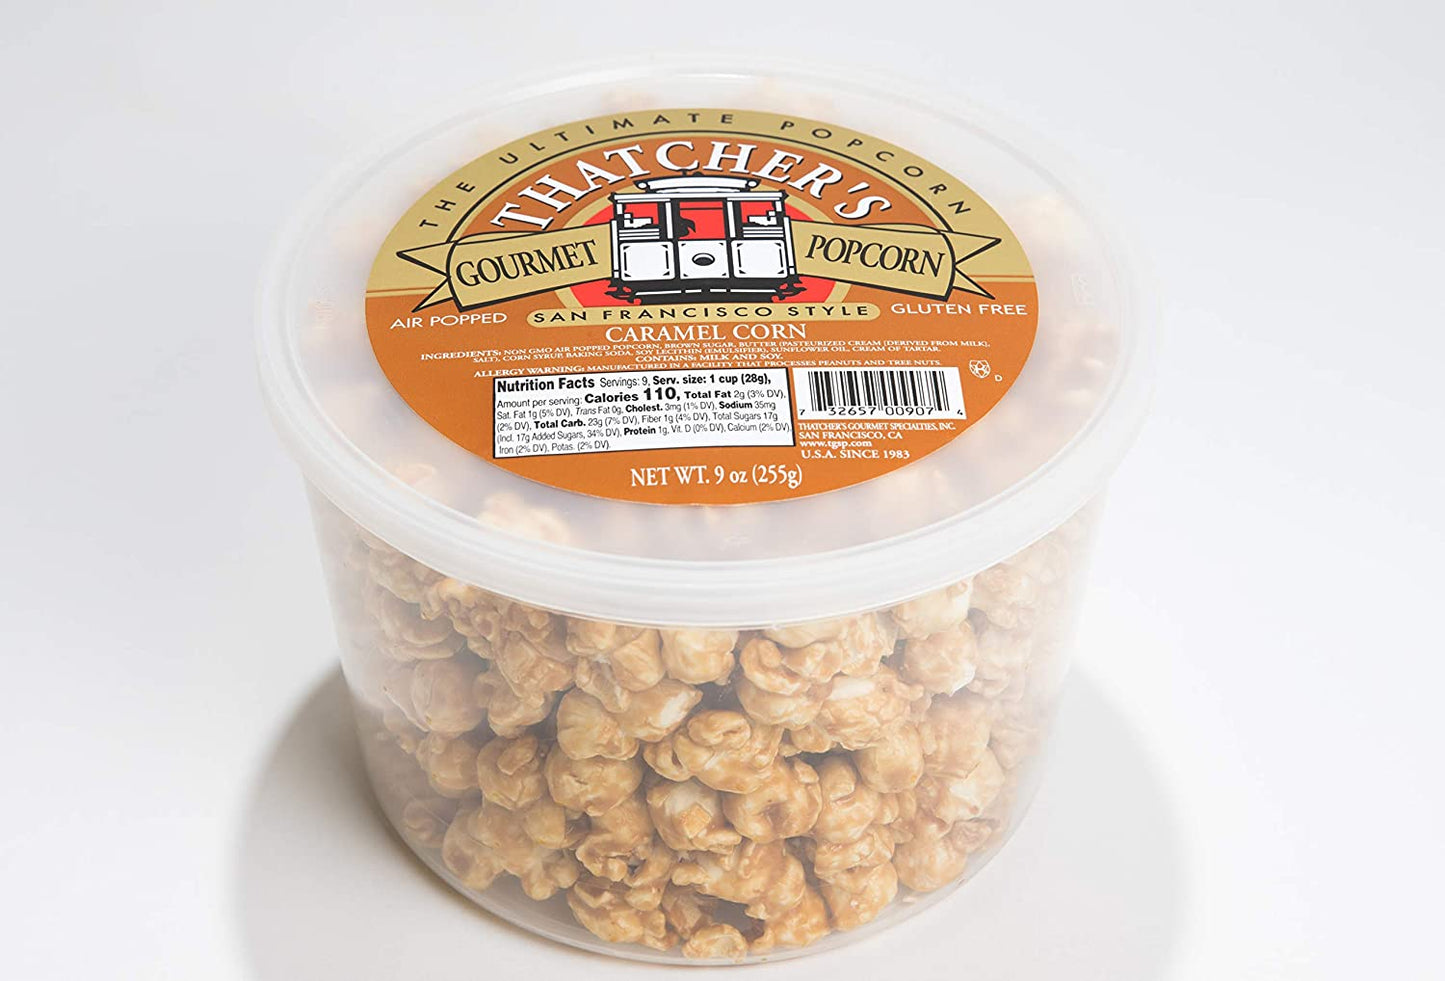 Thatcher's Gourmet Specialties Popcorn, Caramel Corn, 10-Ounce Tubes (Pack of 12)